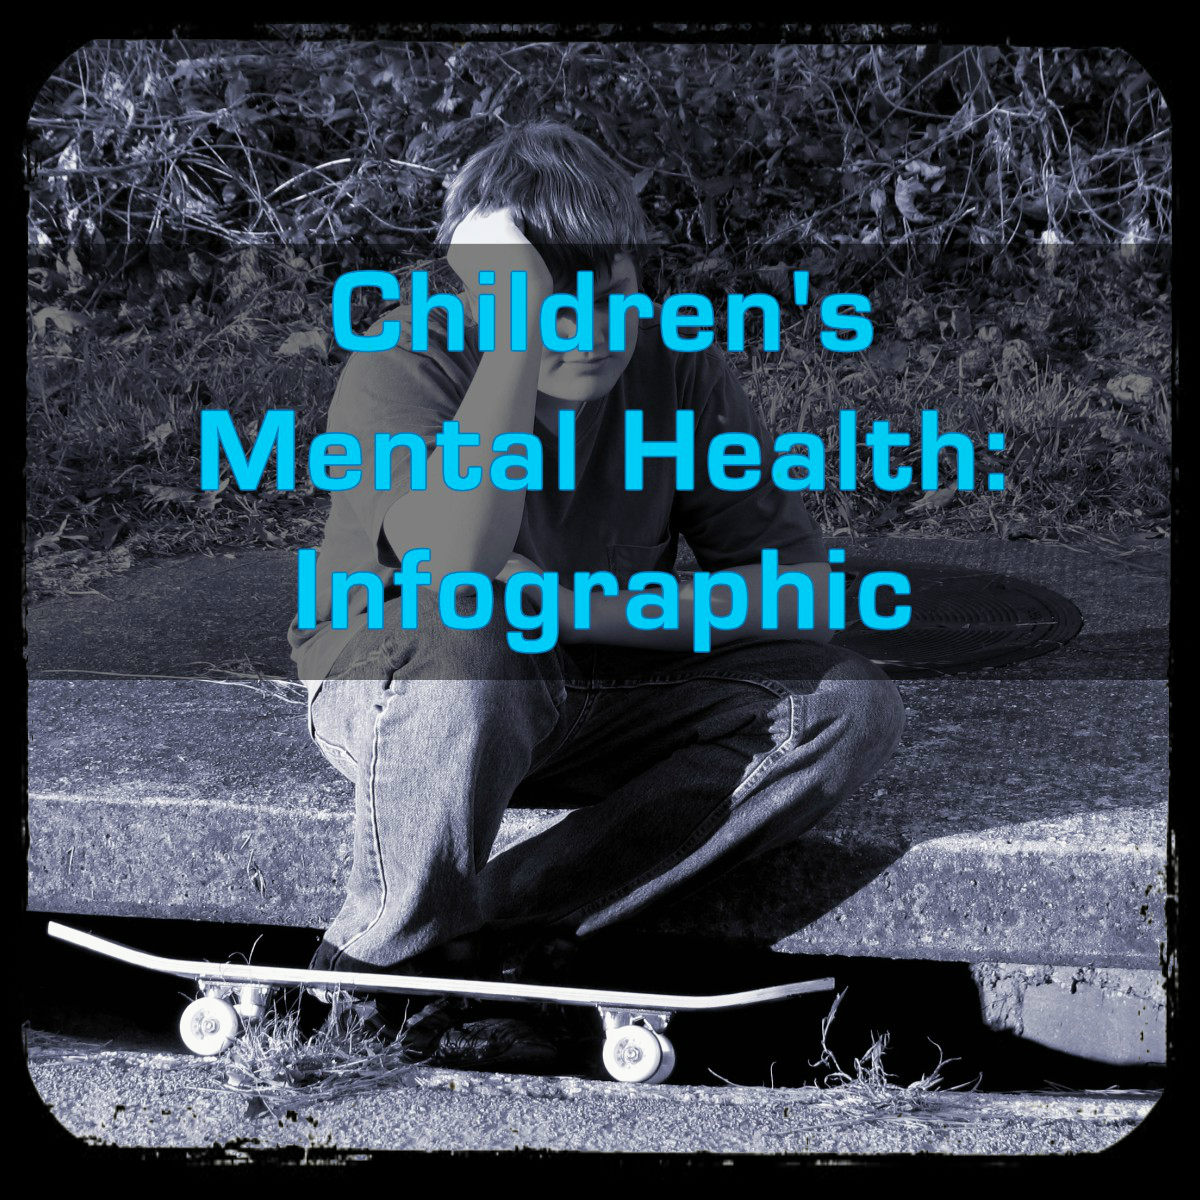 Children’s Mental Health: Infographic